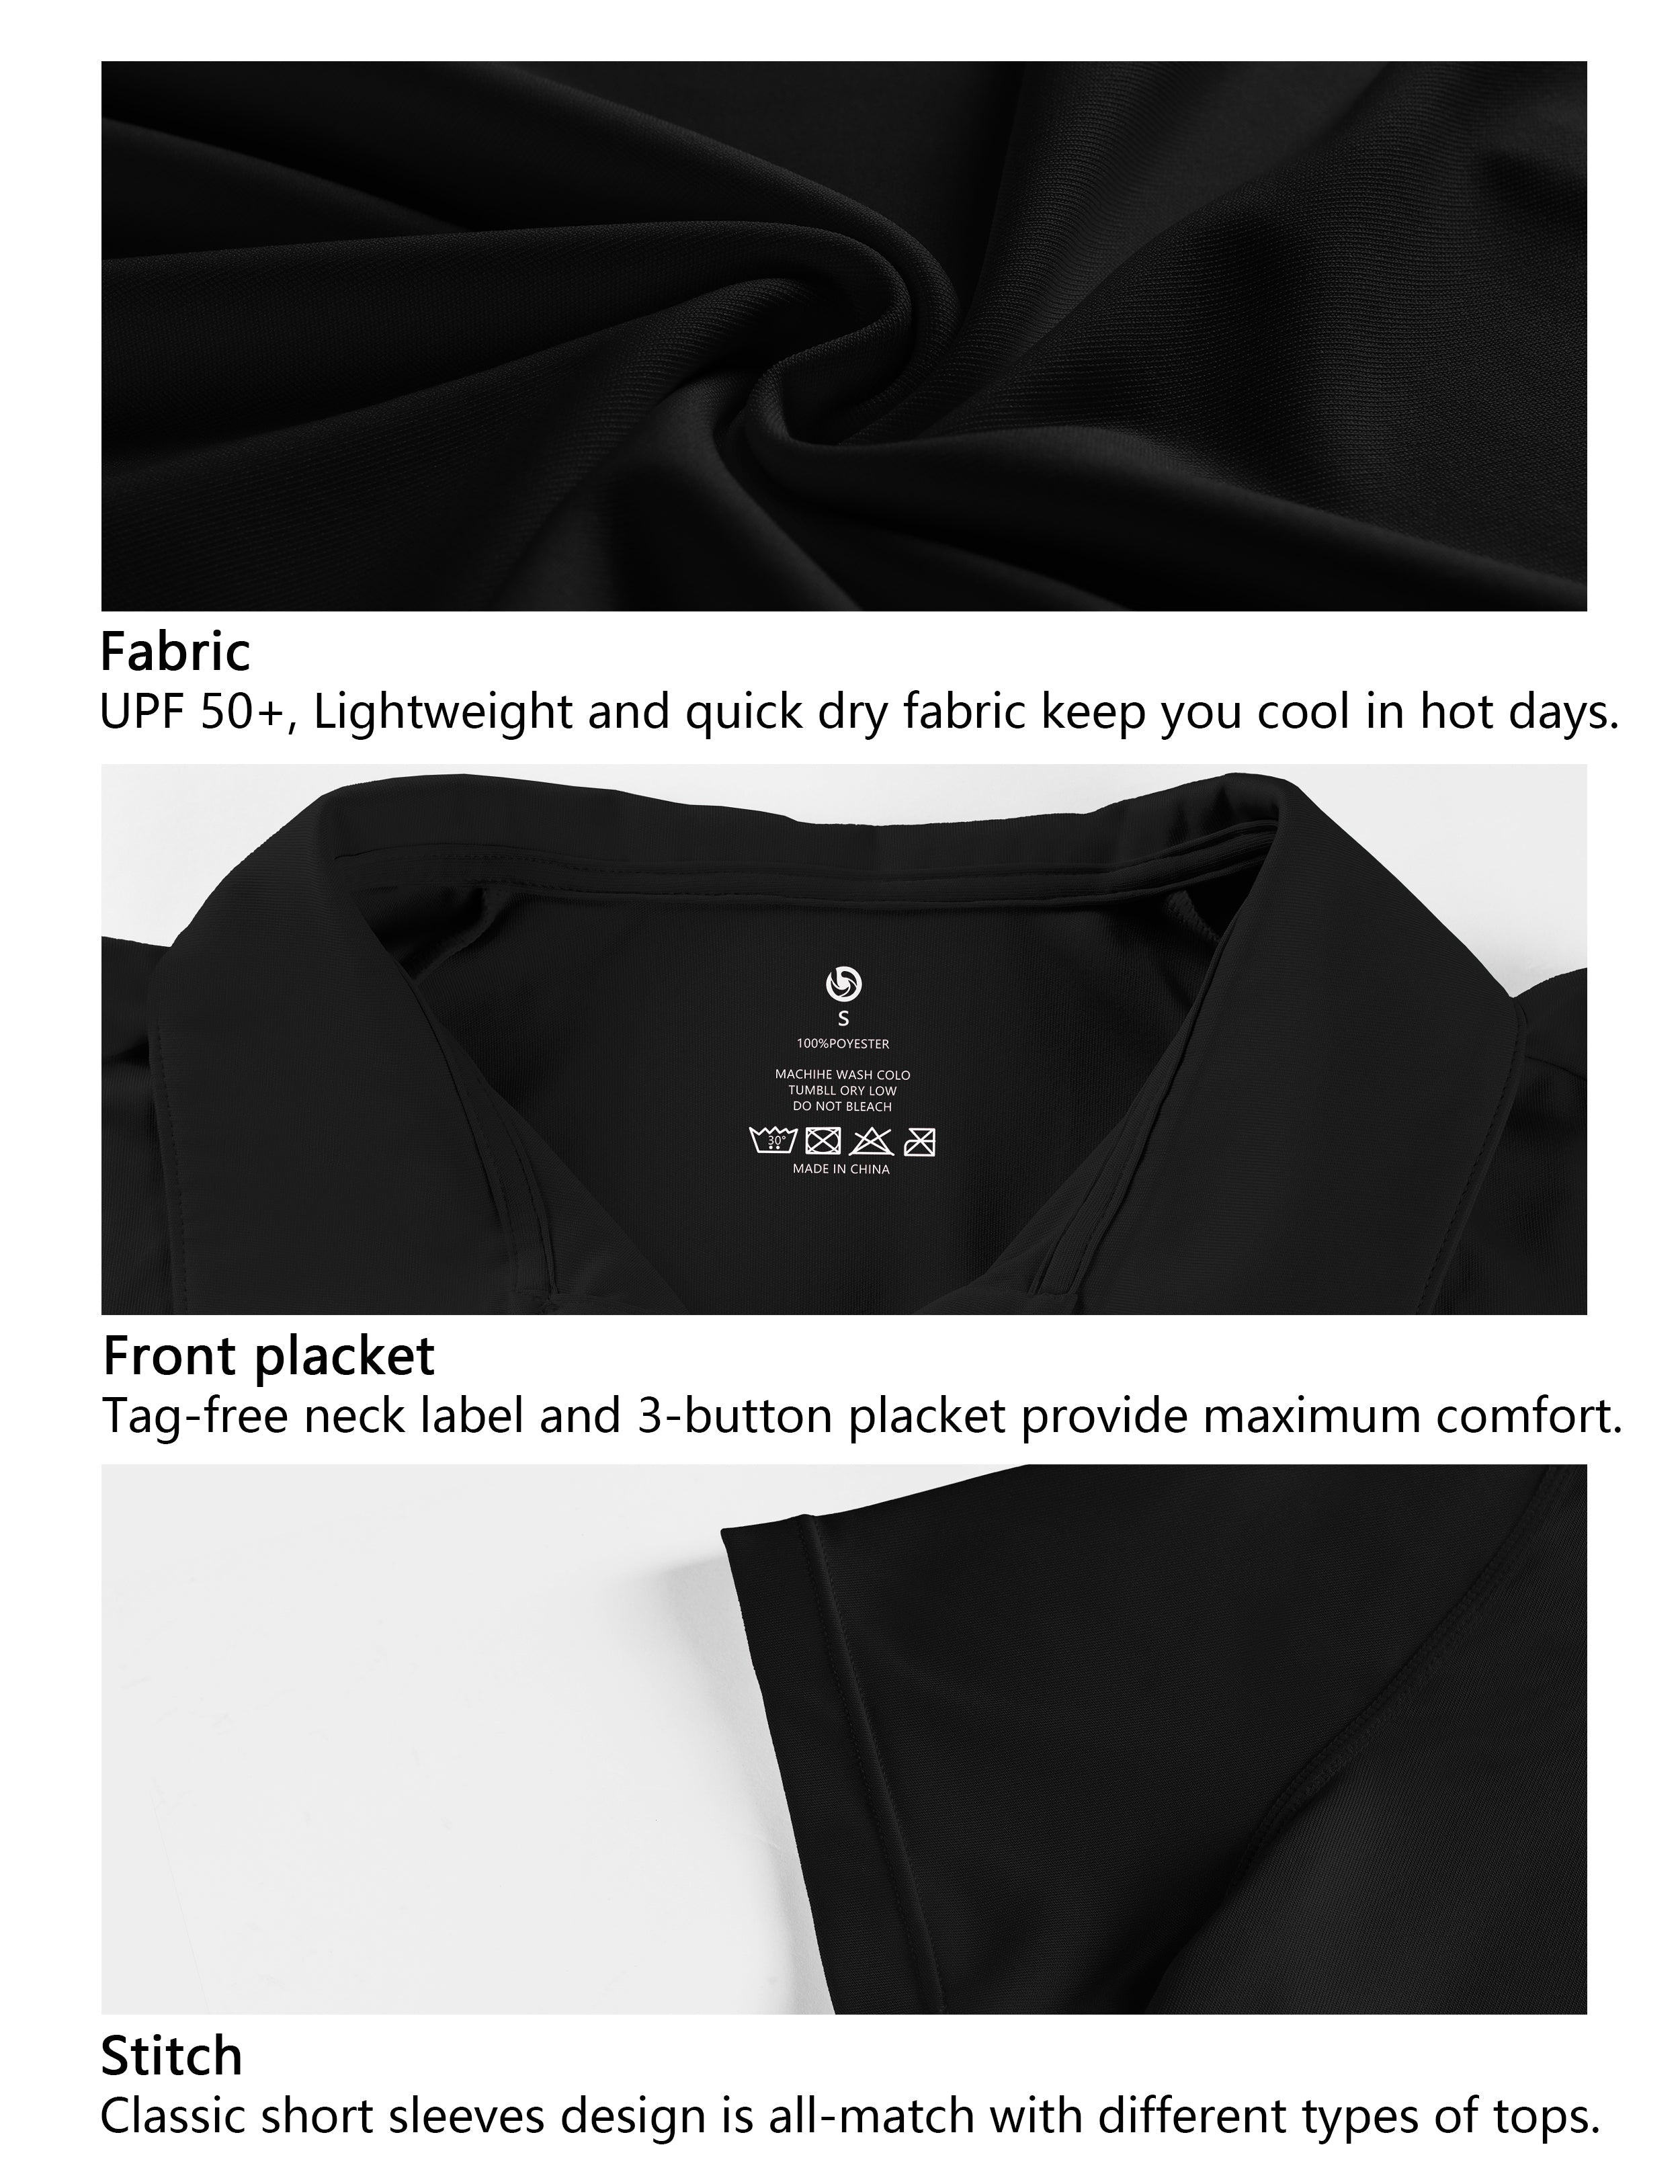 Short Sleeve Slim Fit Polo Shirt black_Pilates